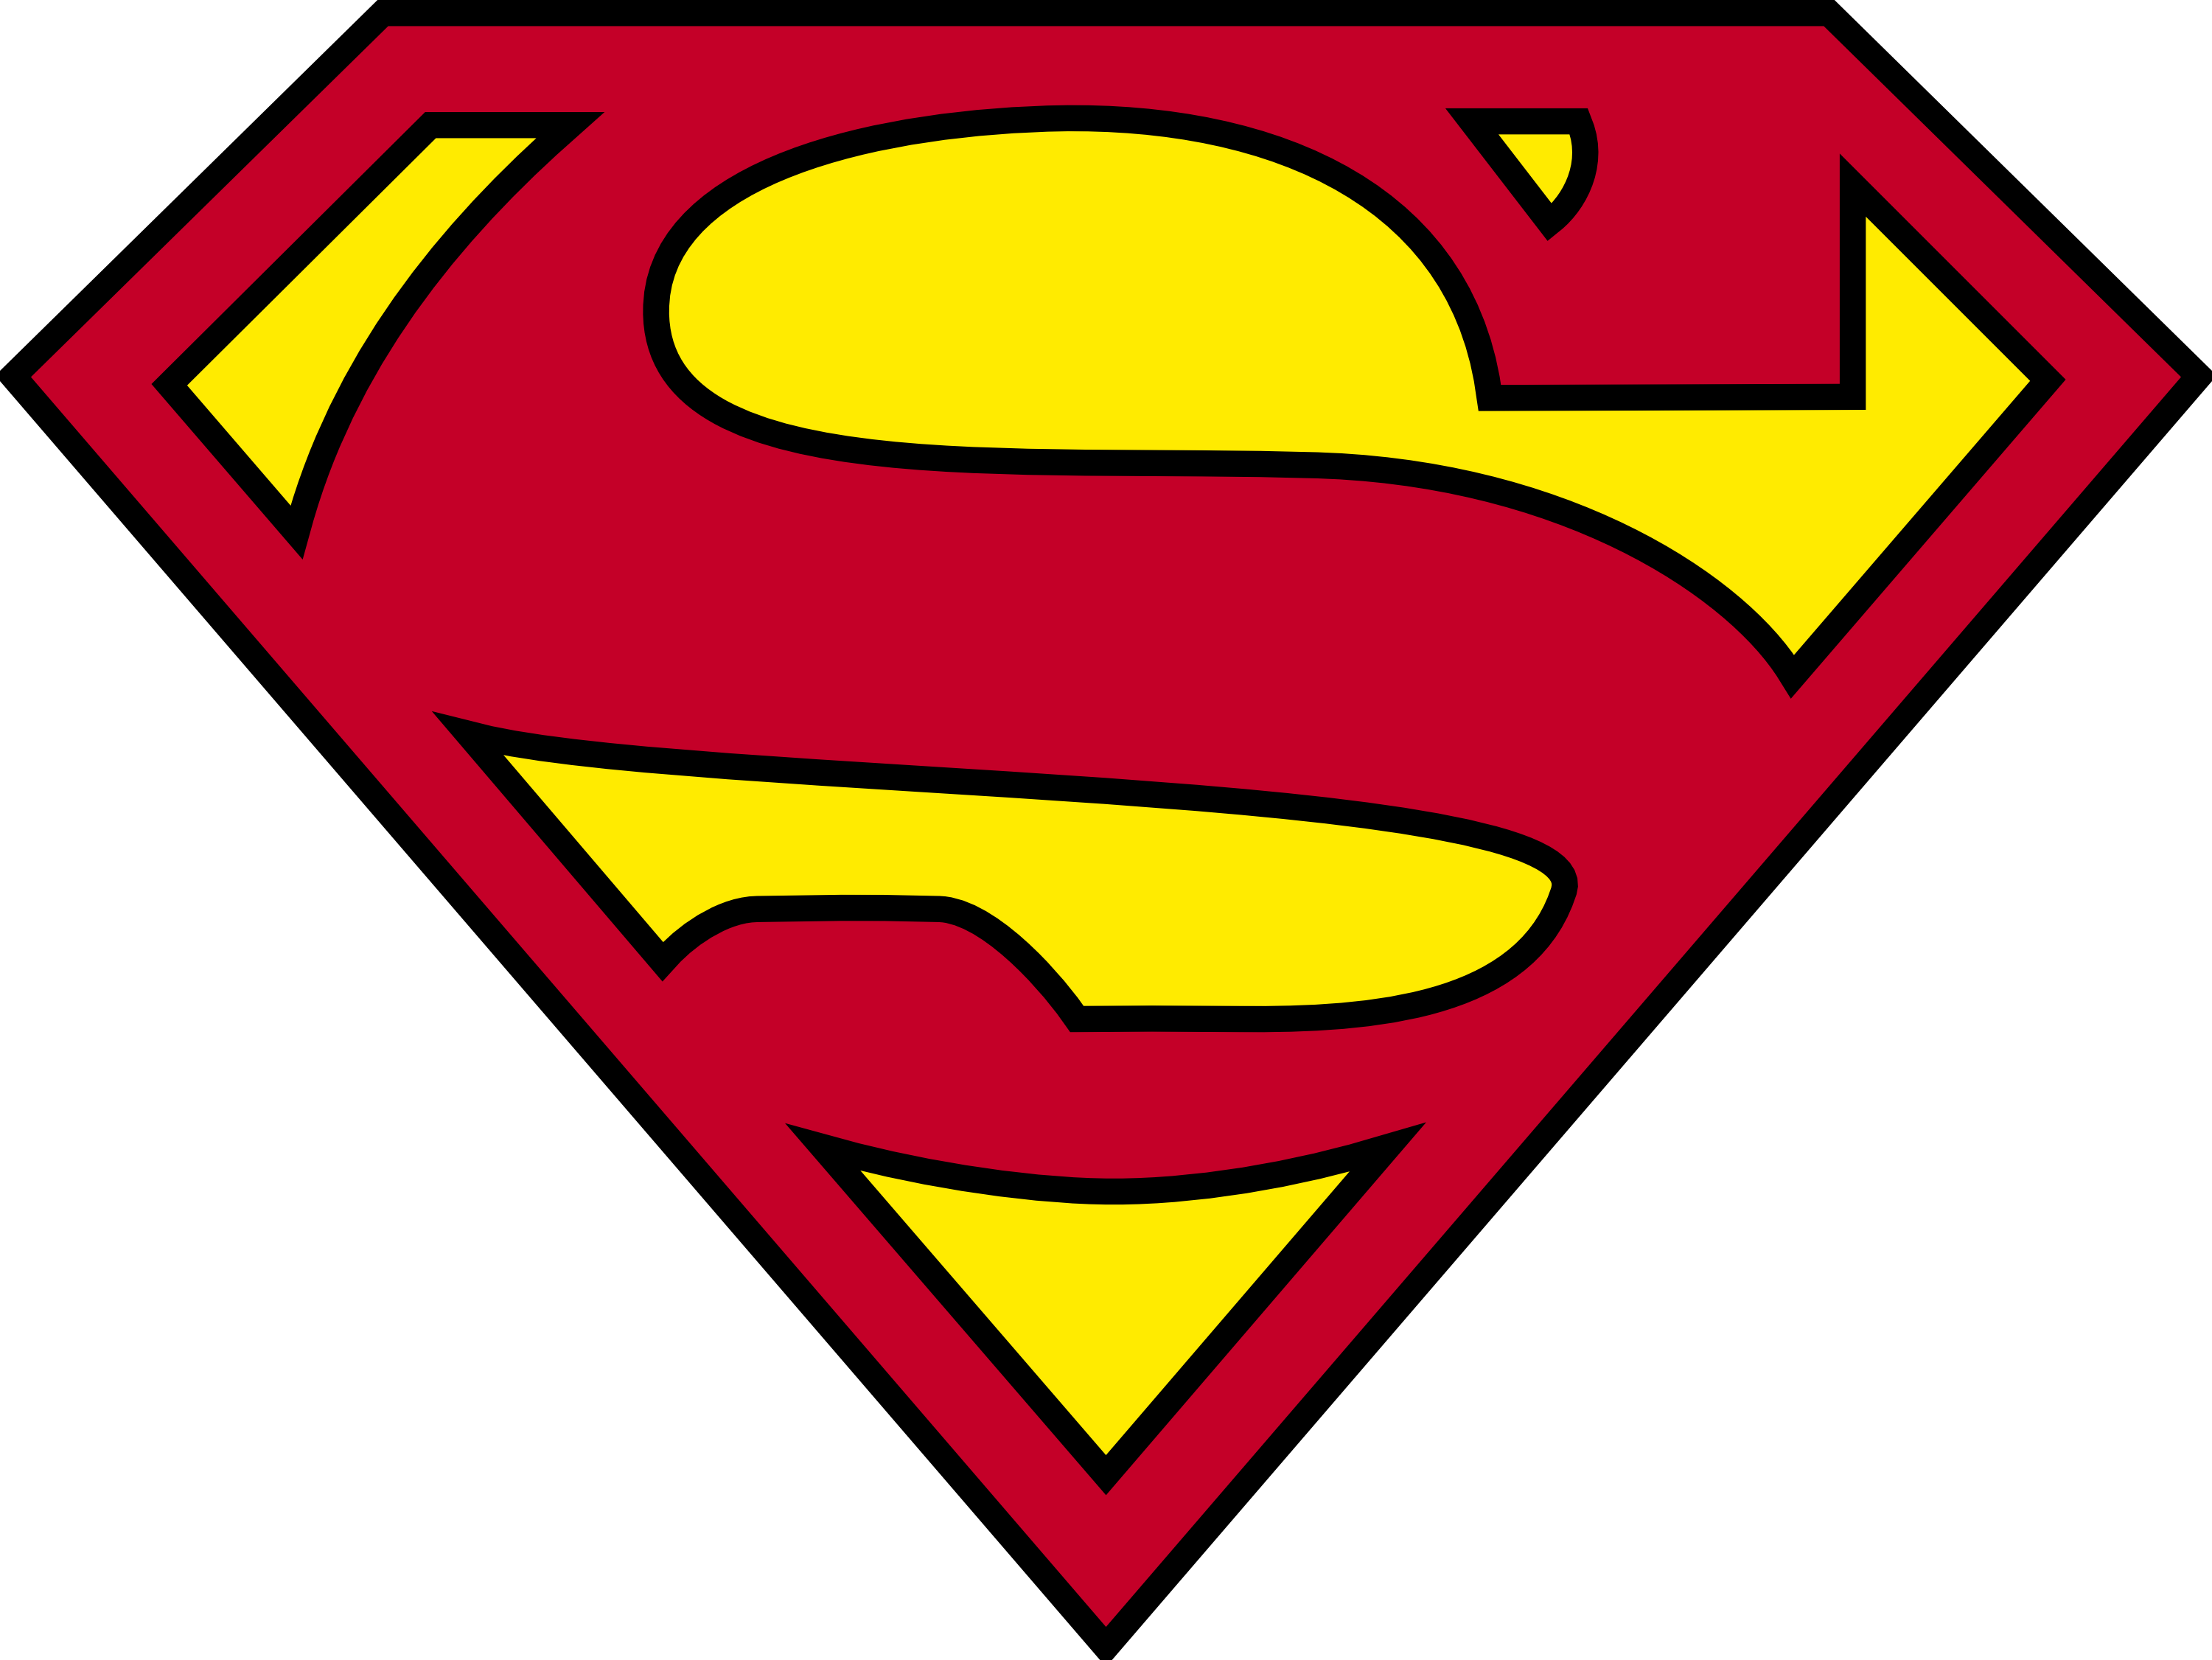 Superman Logo - Superman Logo PNG Image - PurePNG | Free transparent CC0 PNG Image ...